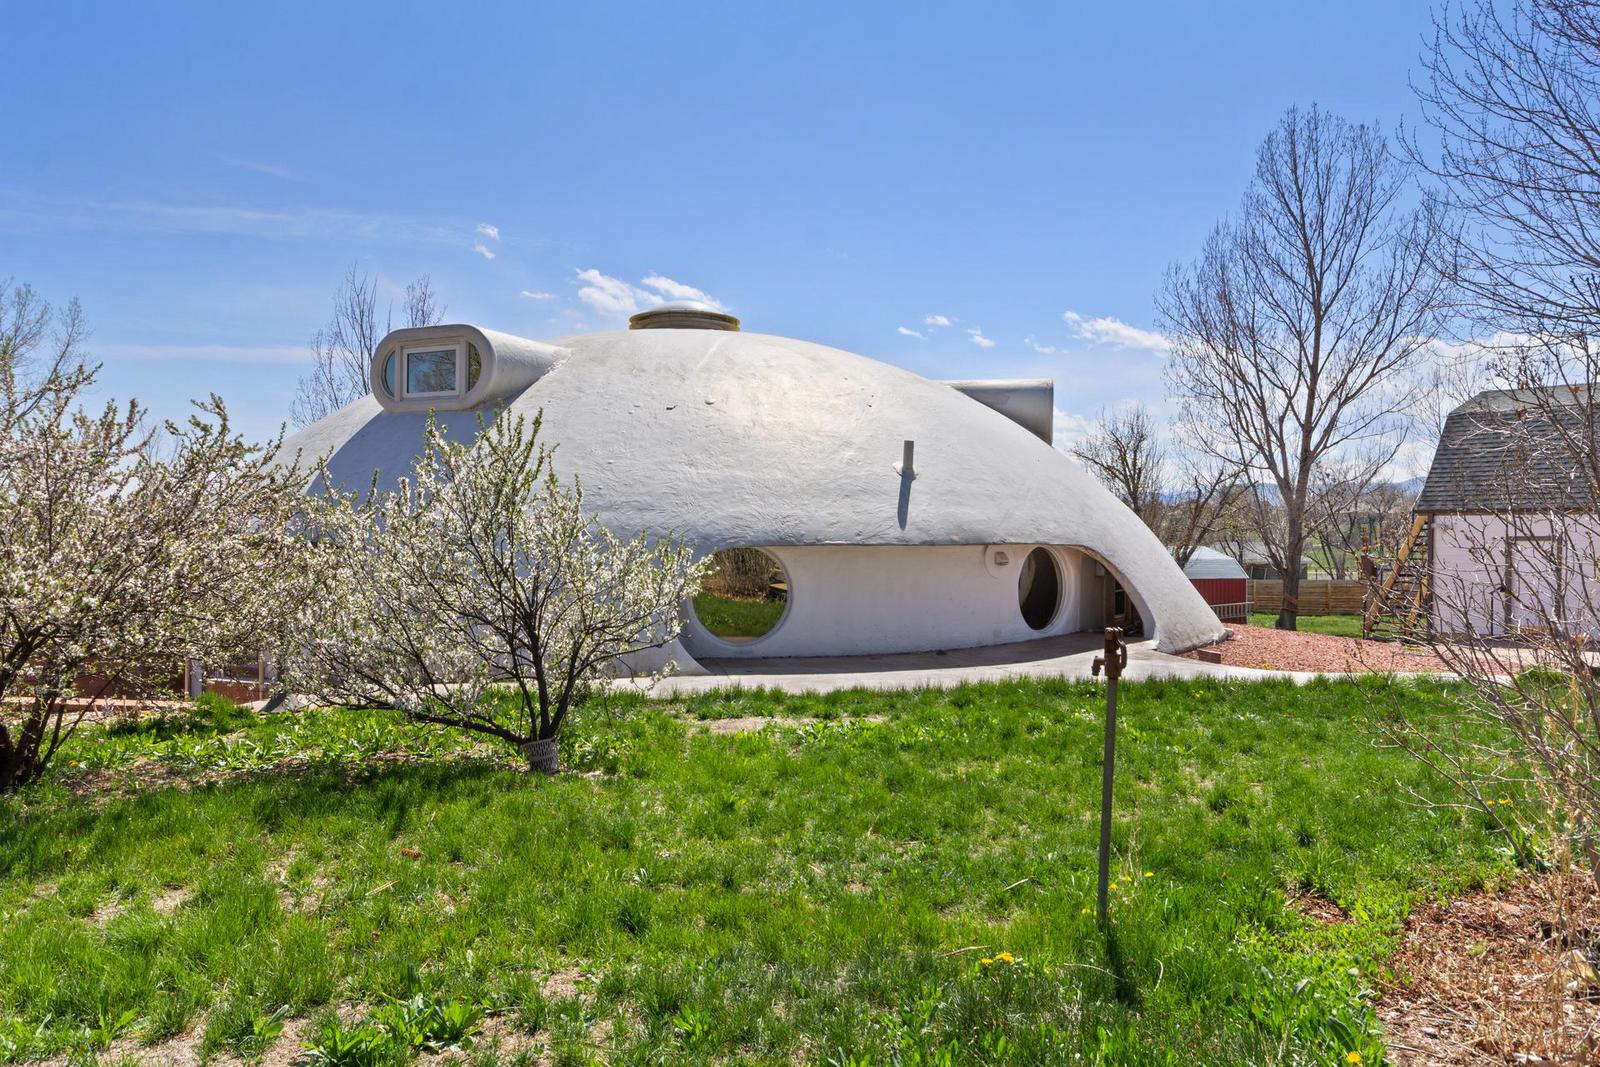 Spaceship dome home.